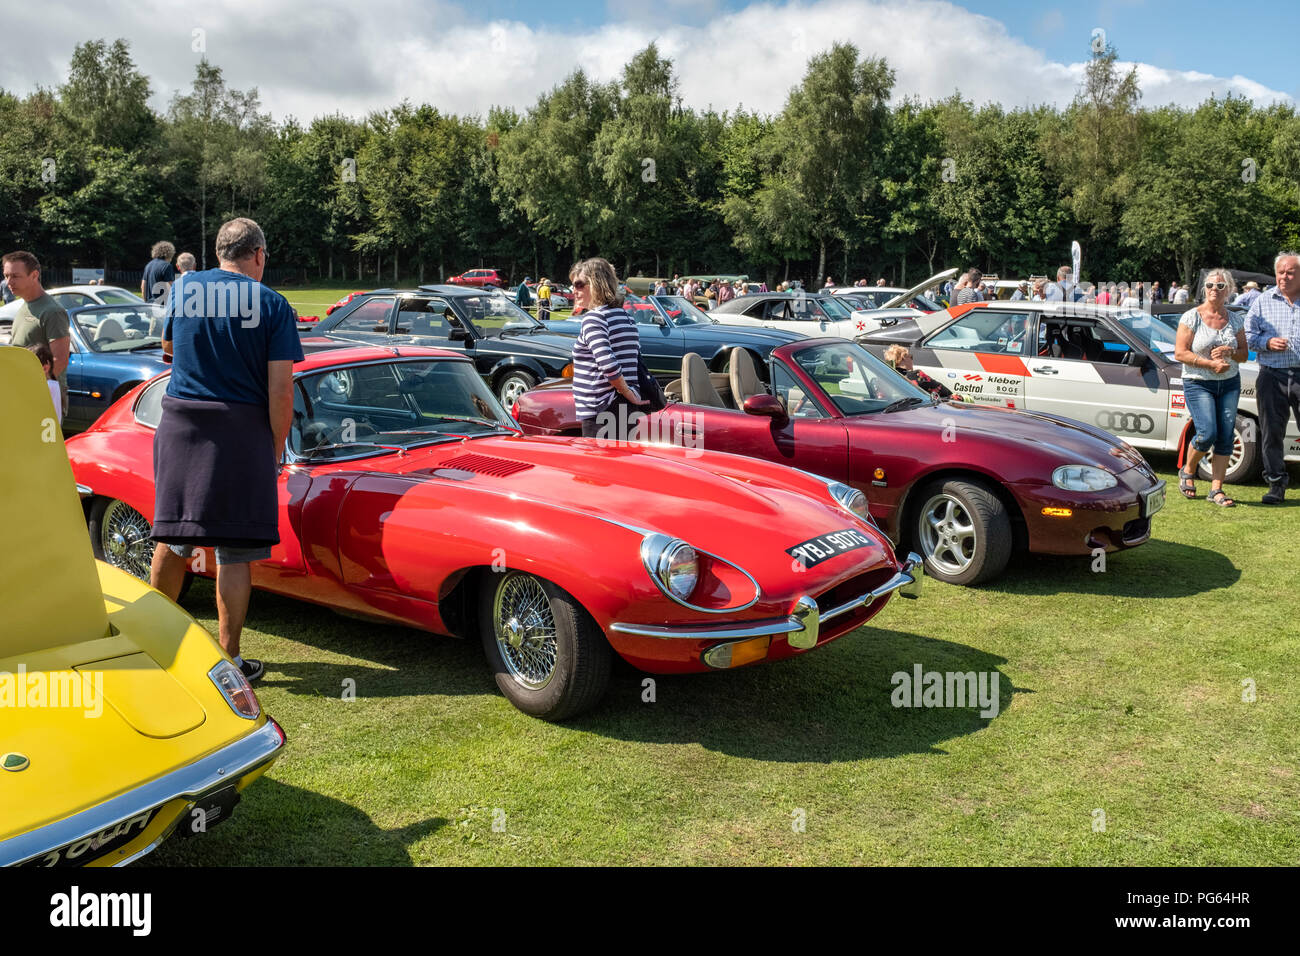 Red E-type Jaguar at a classic car show. Stock Photo